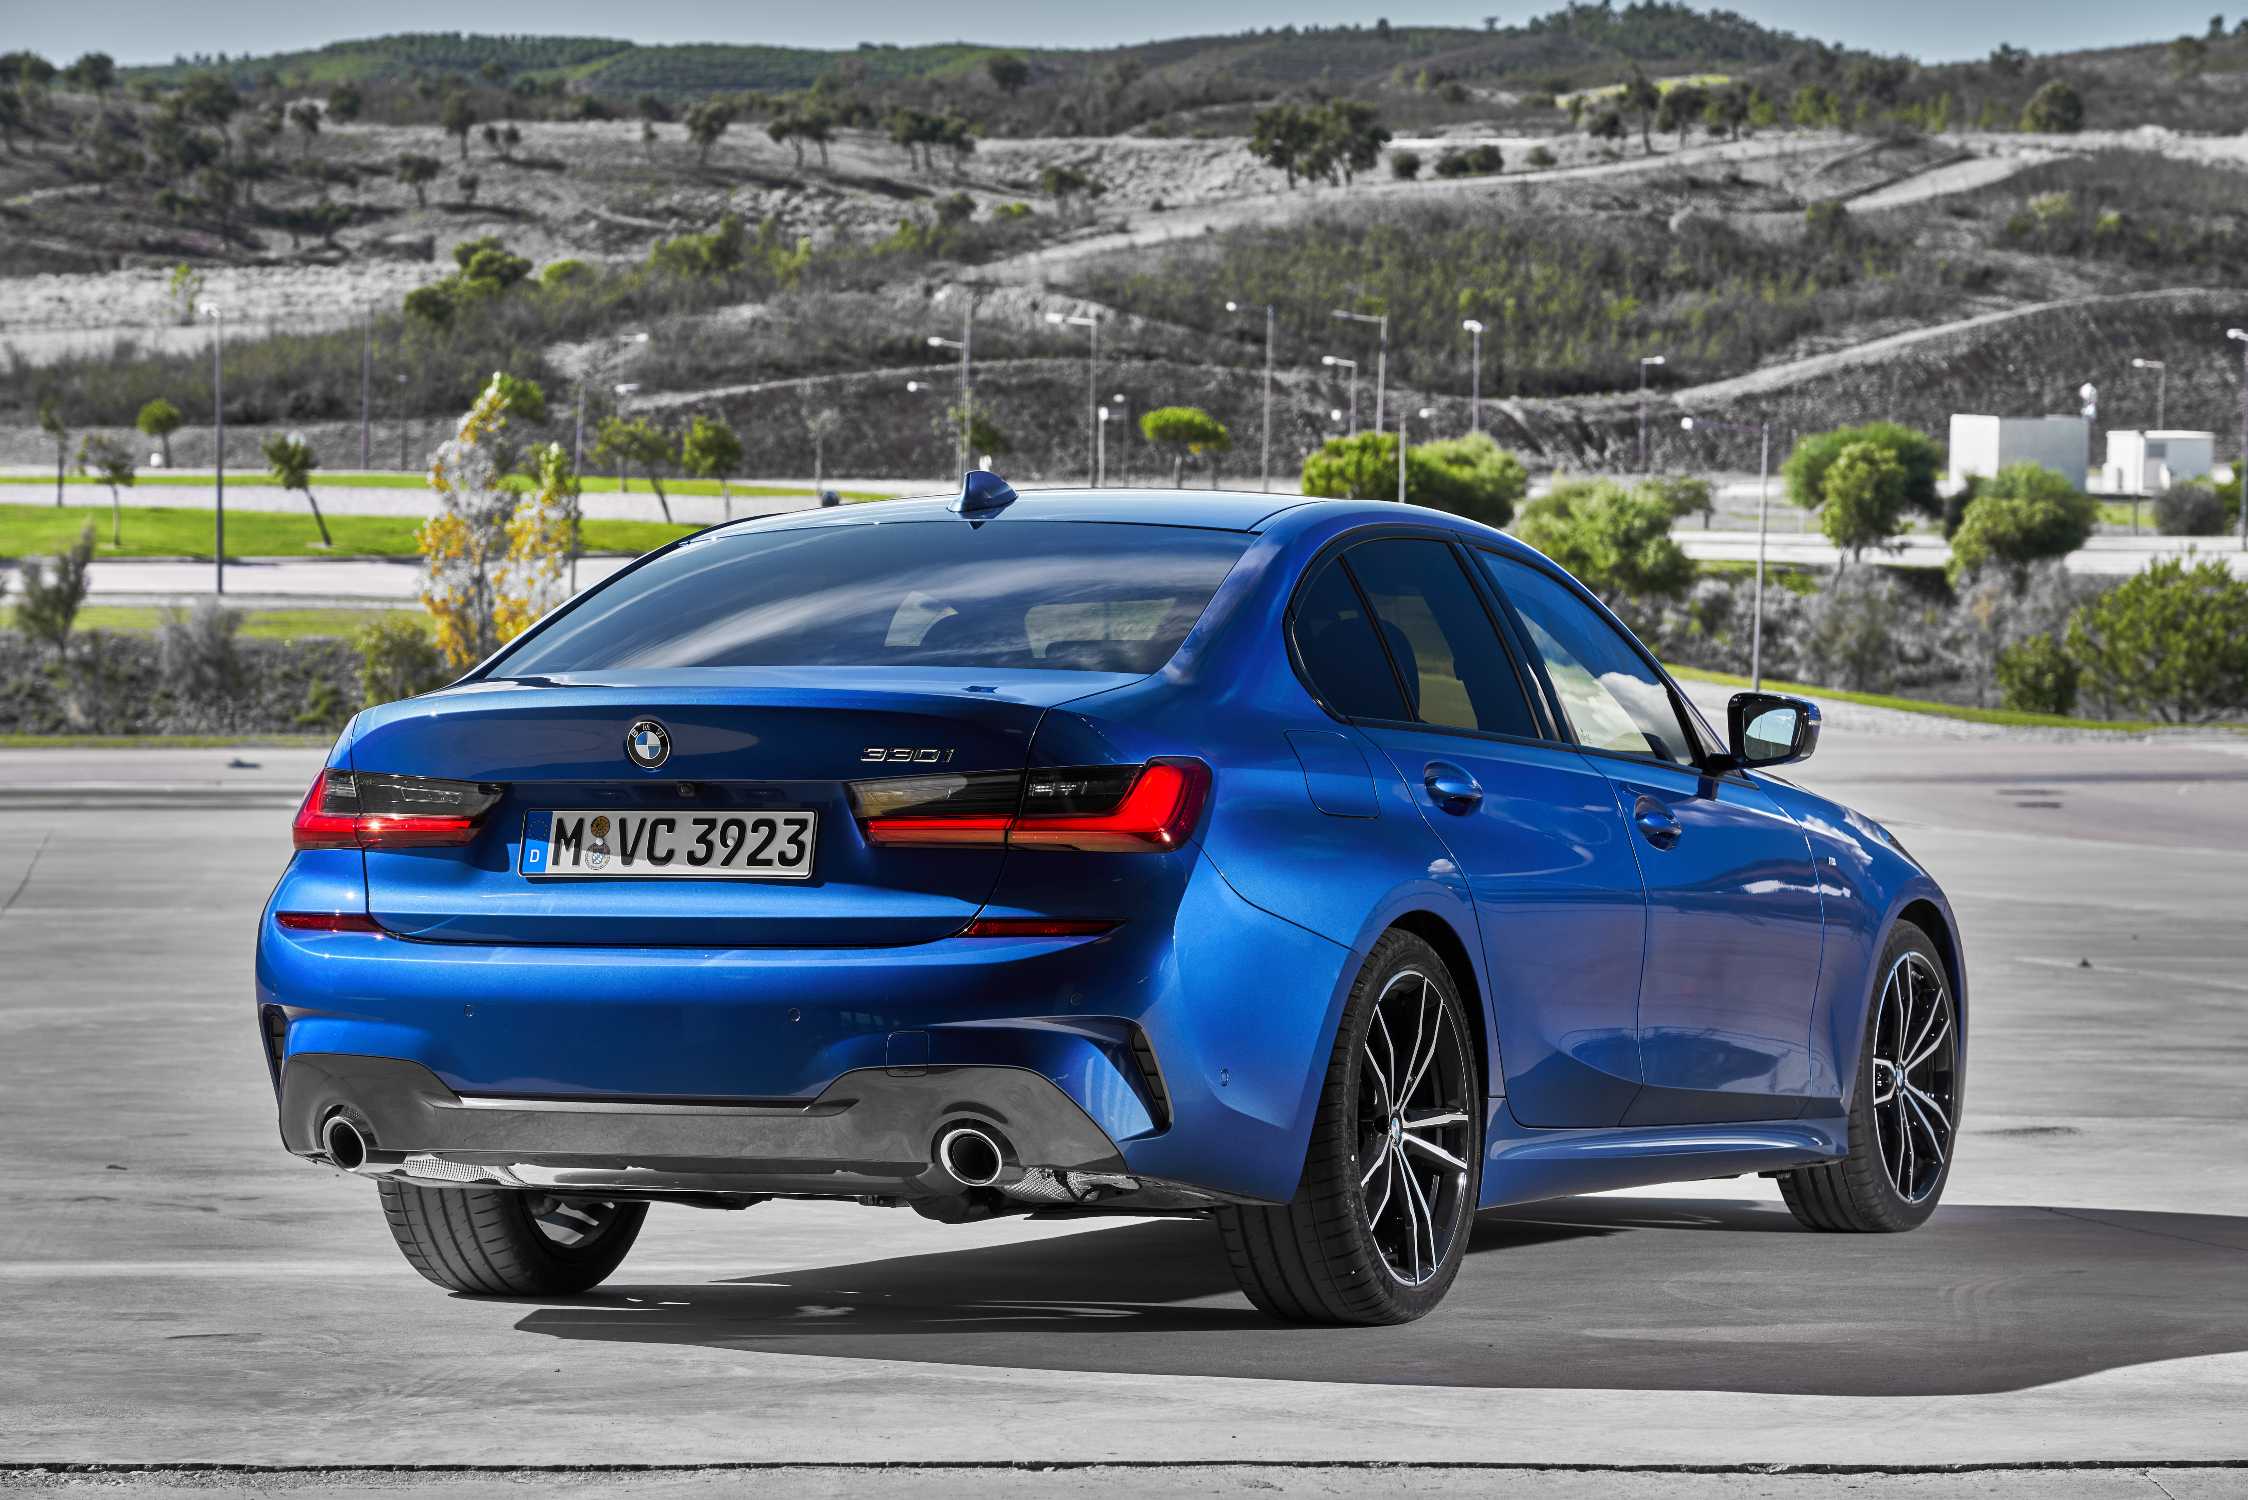 The all-new BMW 330i, Model M Sport, Portimao blue metallic, Rim 19